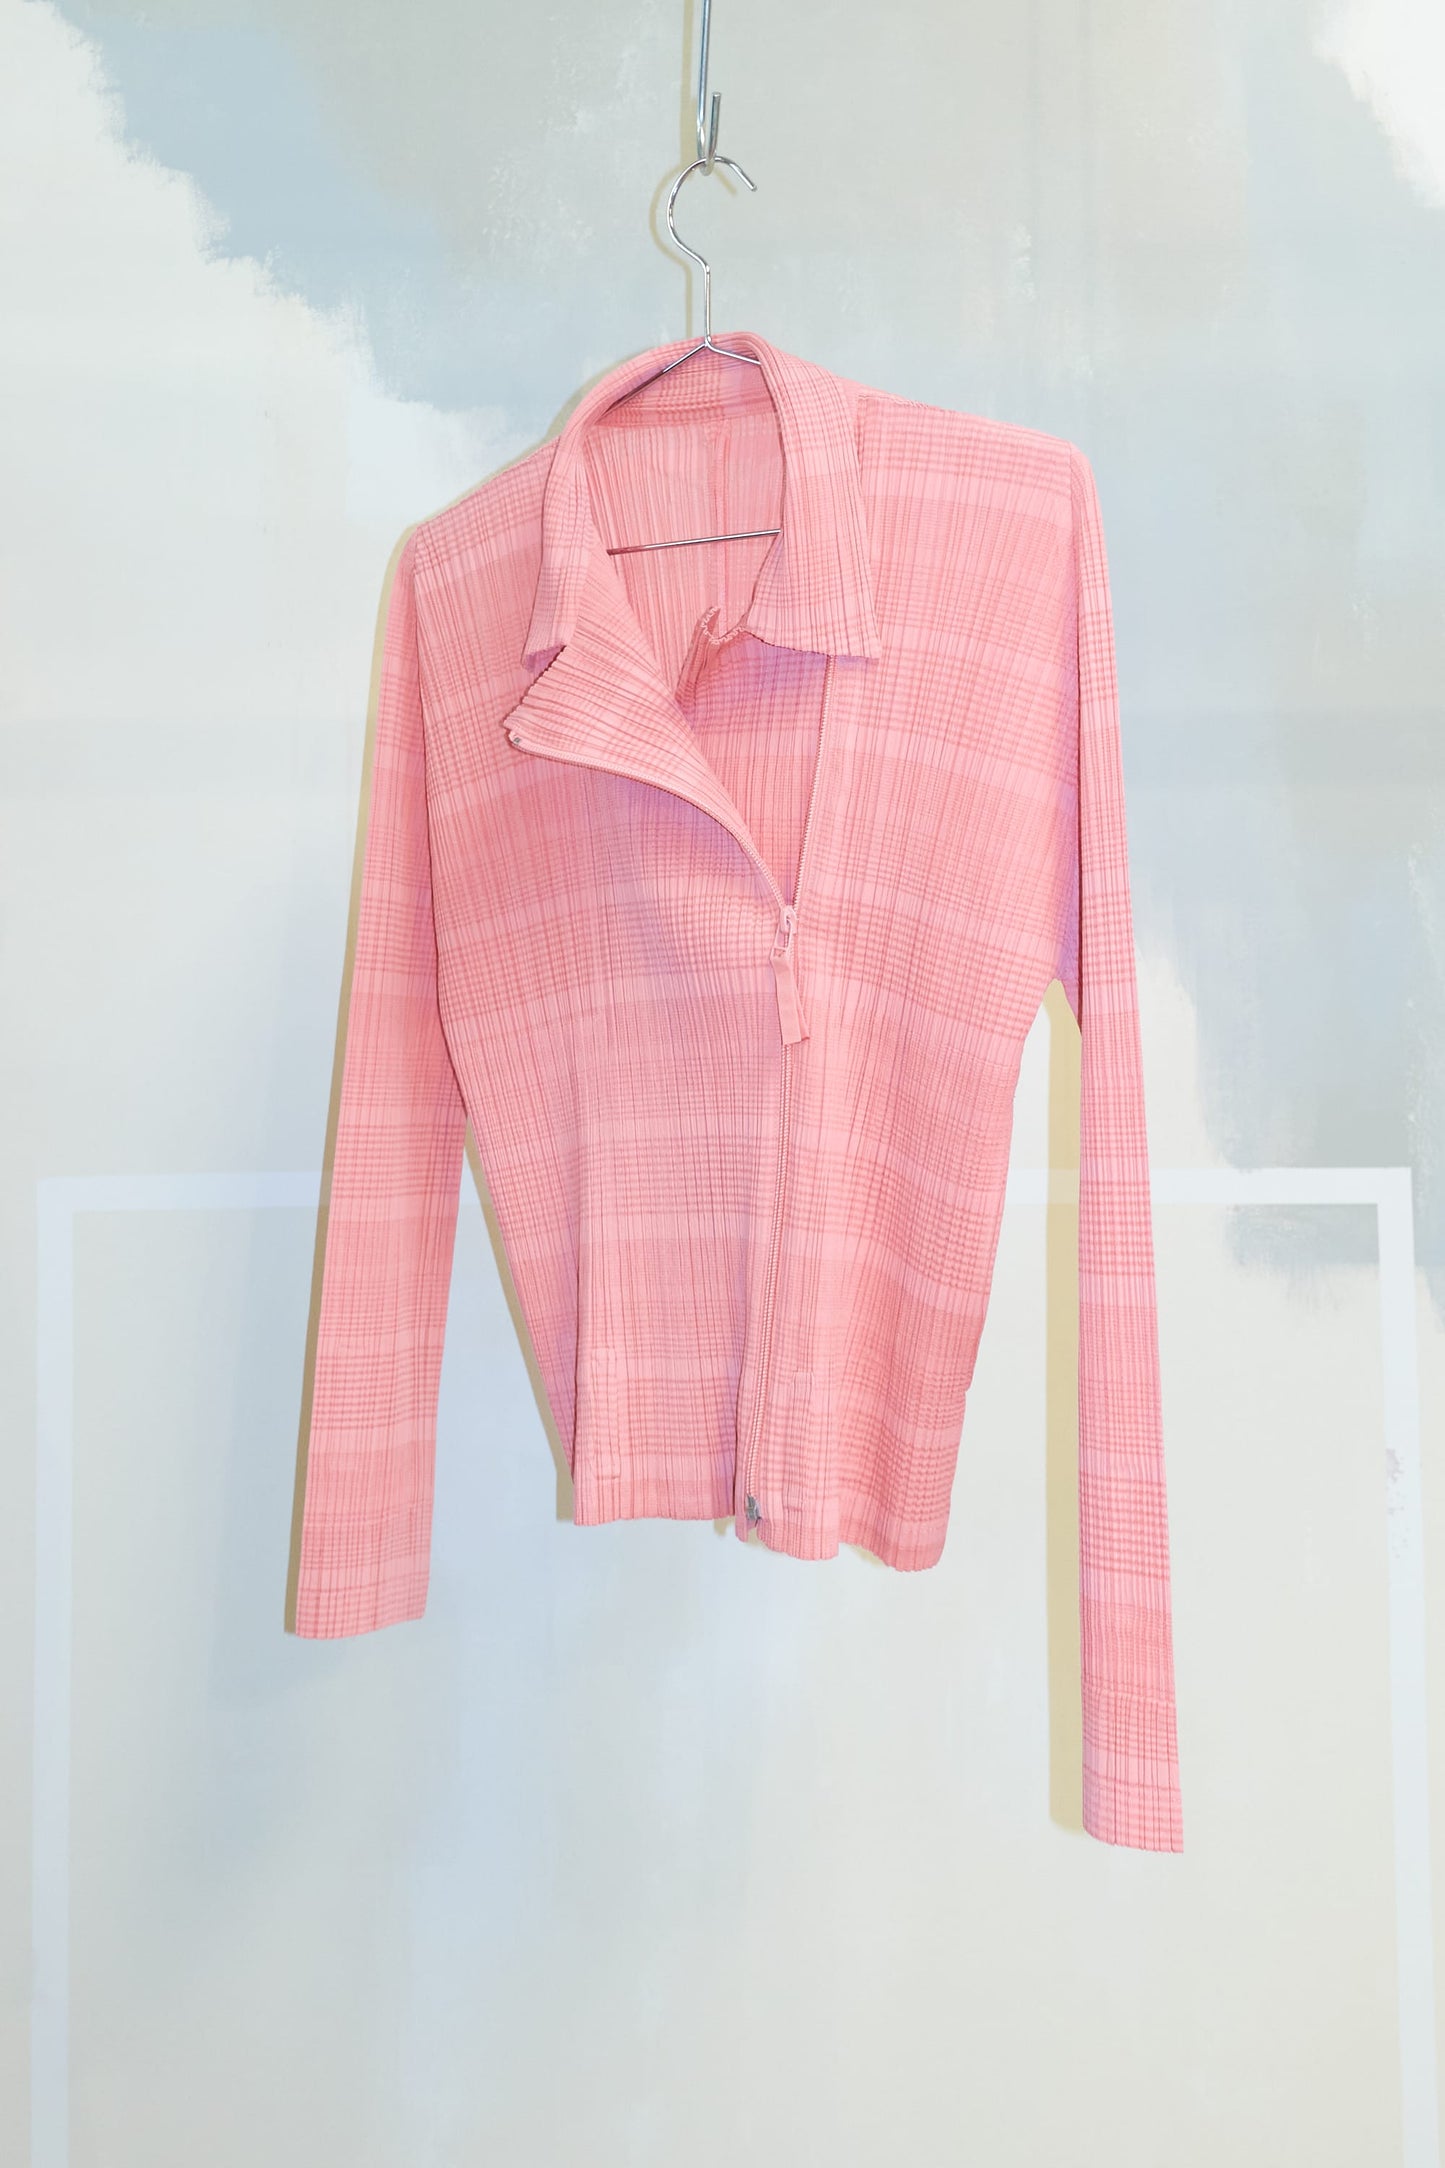 Issey Miyake Pleats Please pink pleated zip jacket